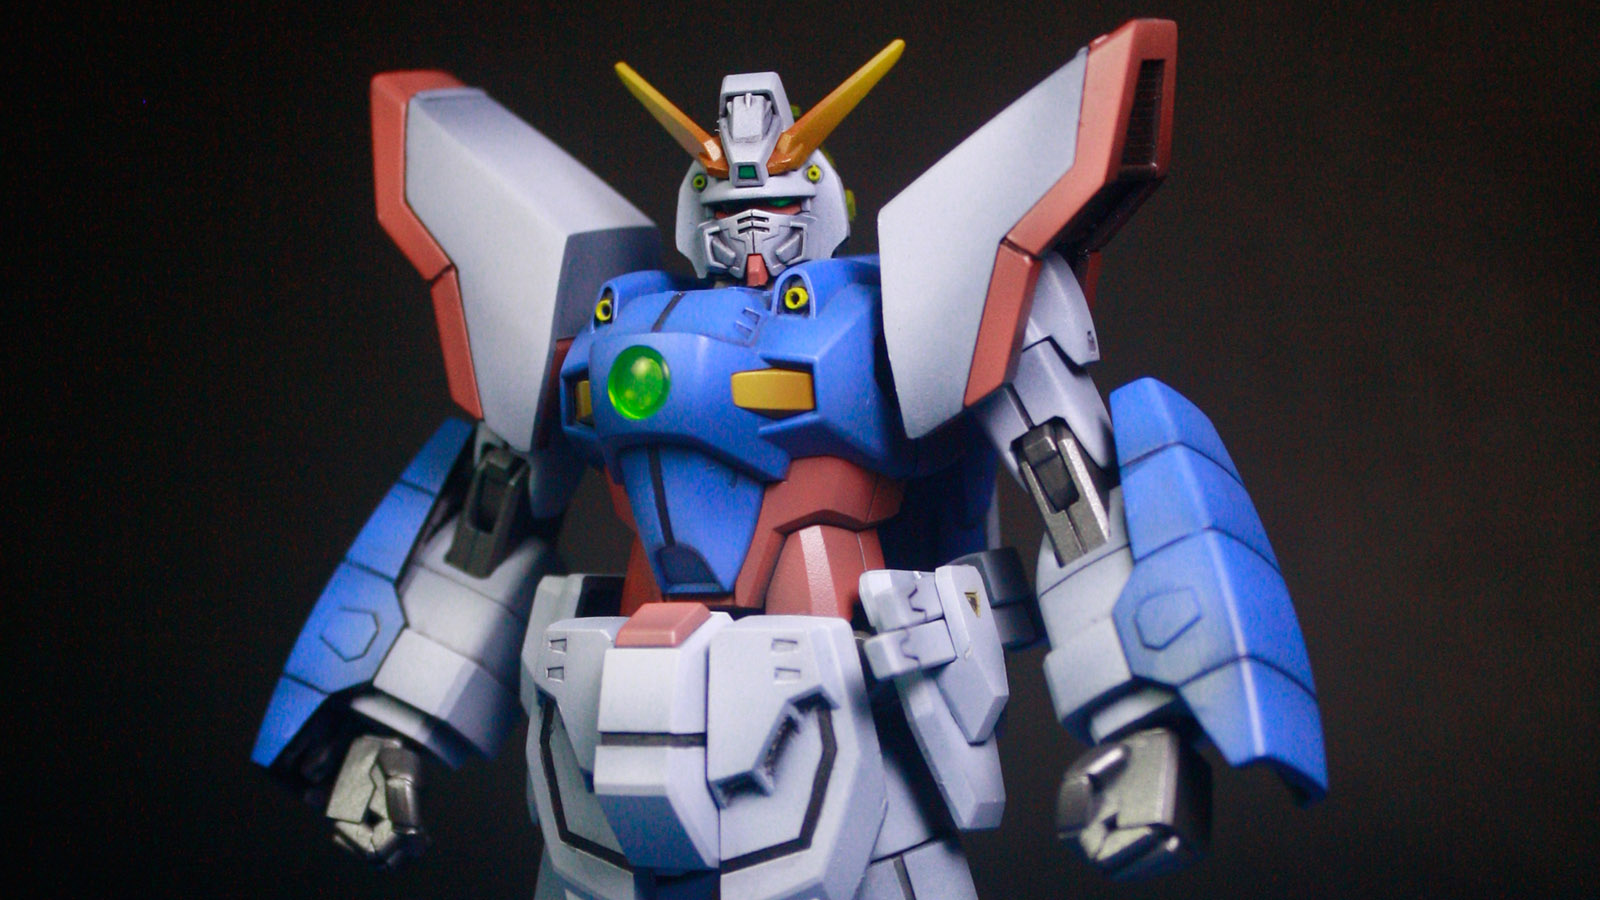 Primer Paint Spray Model, Gundam Model Spray Paint